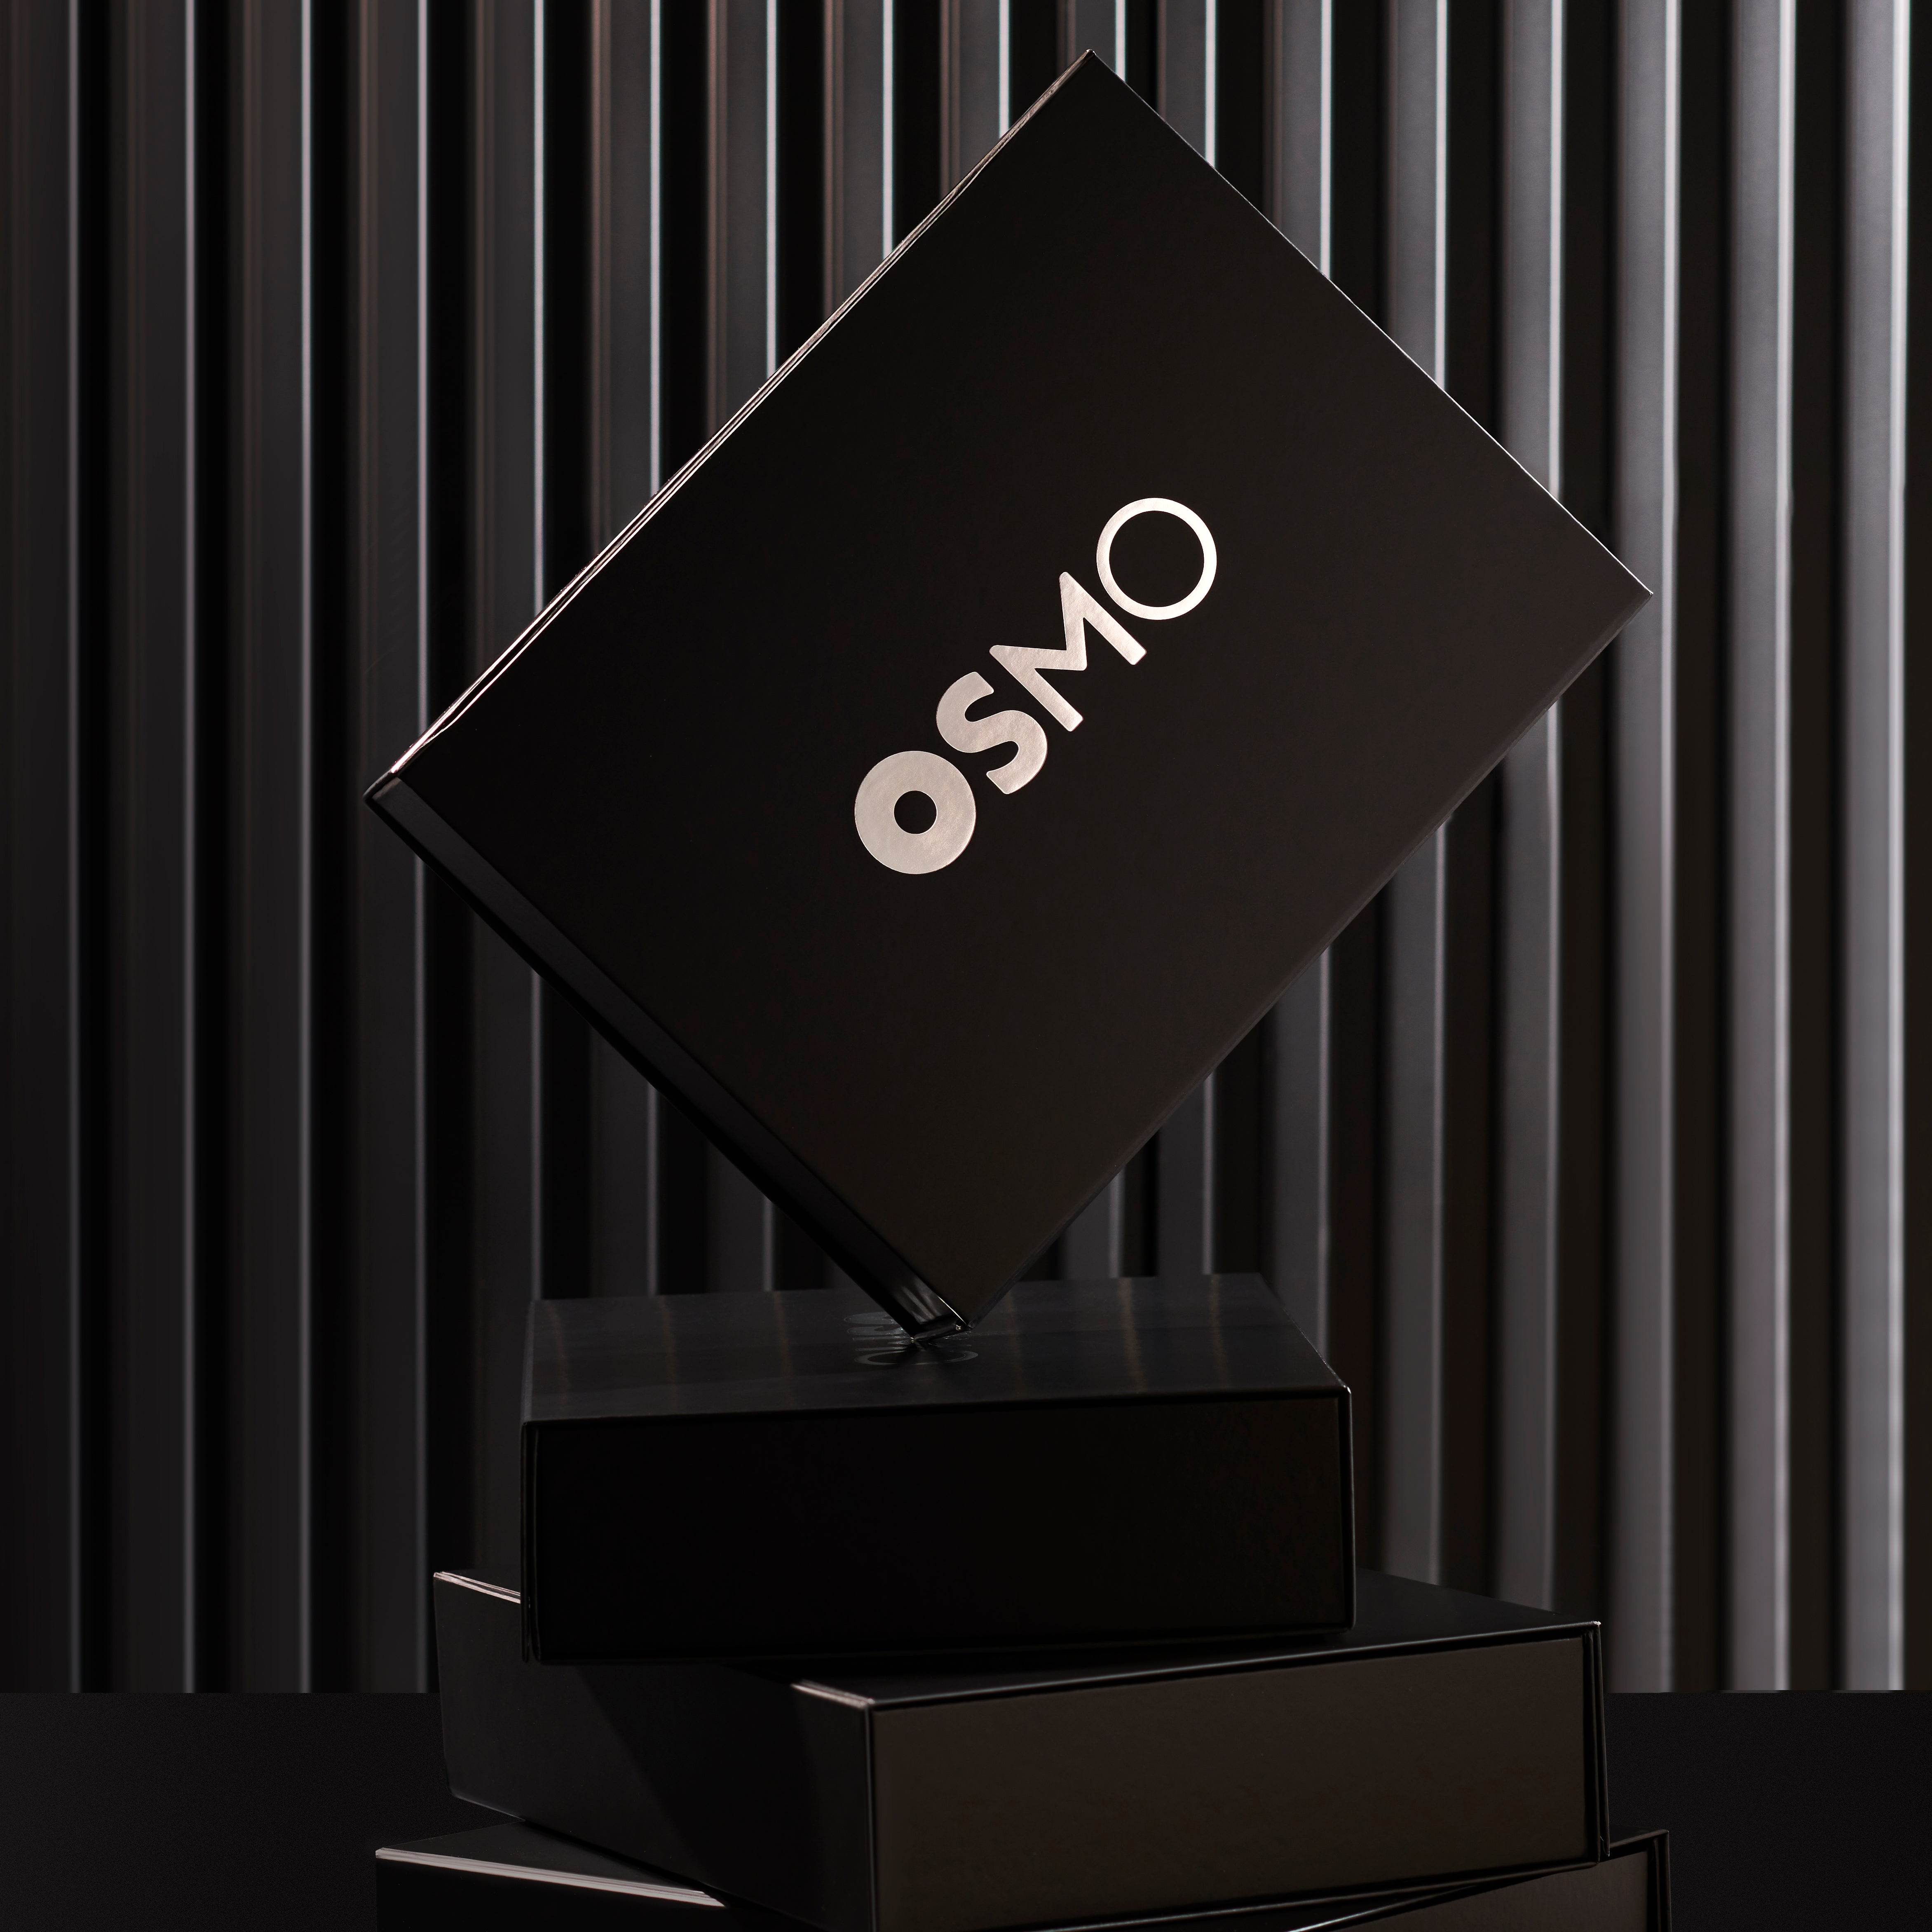 Osmo Salt Bundle 2.0 with FREE Gift Box